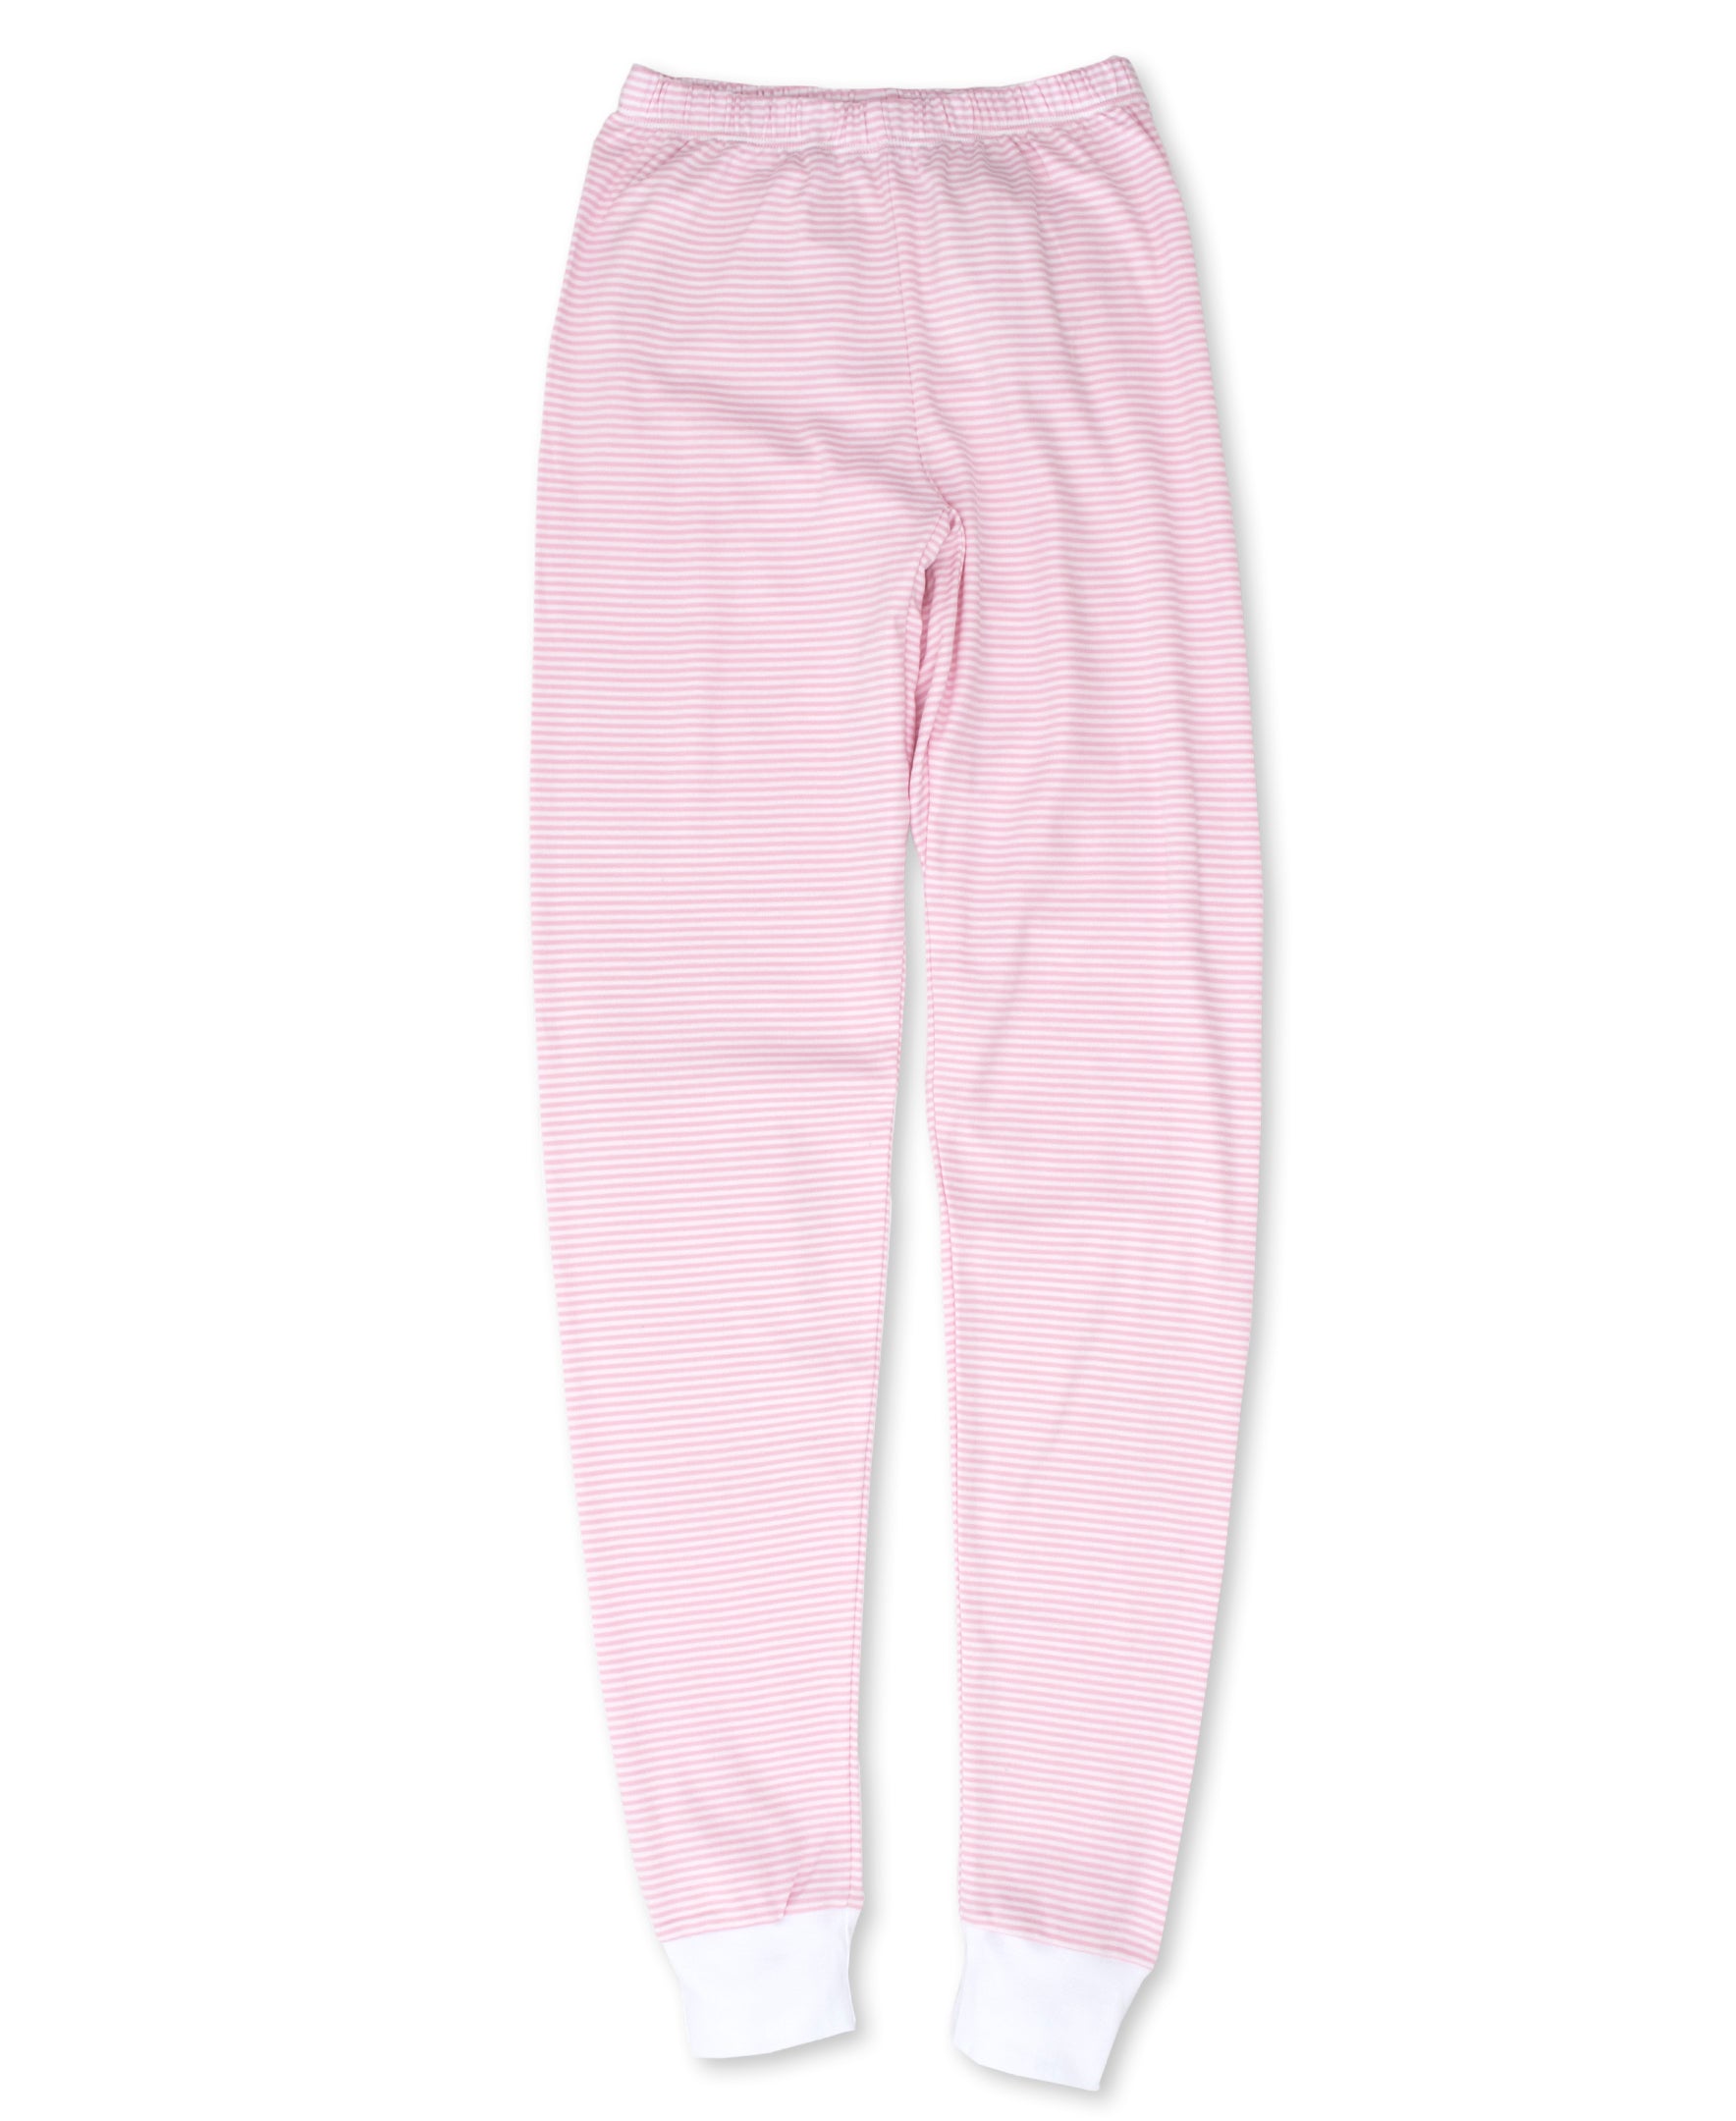 Simple Stripes Pink Adult Pajama Bottom - Kissy Kissy